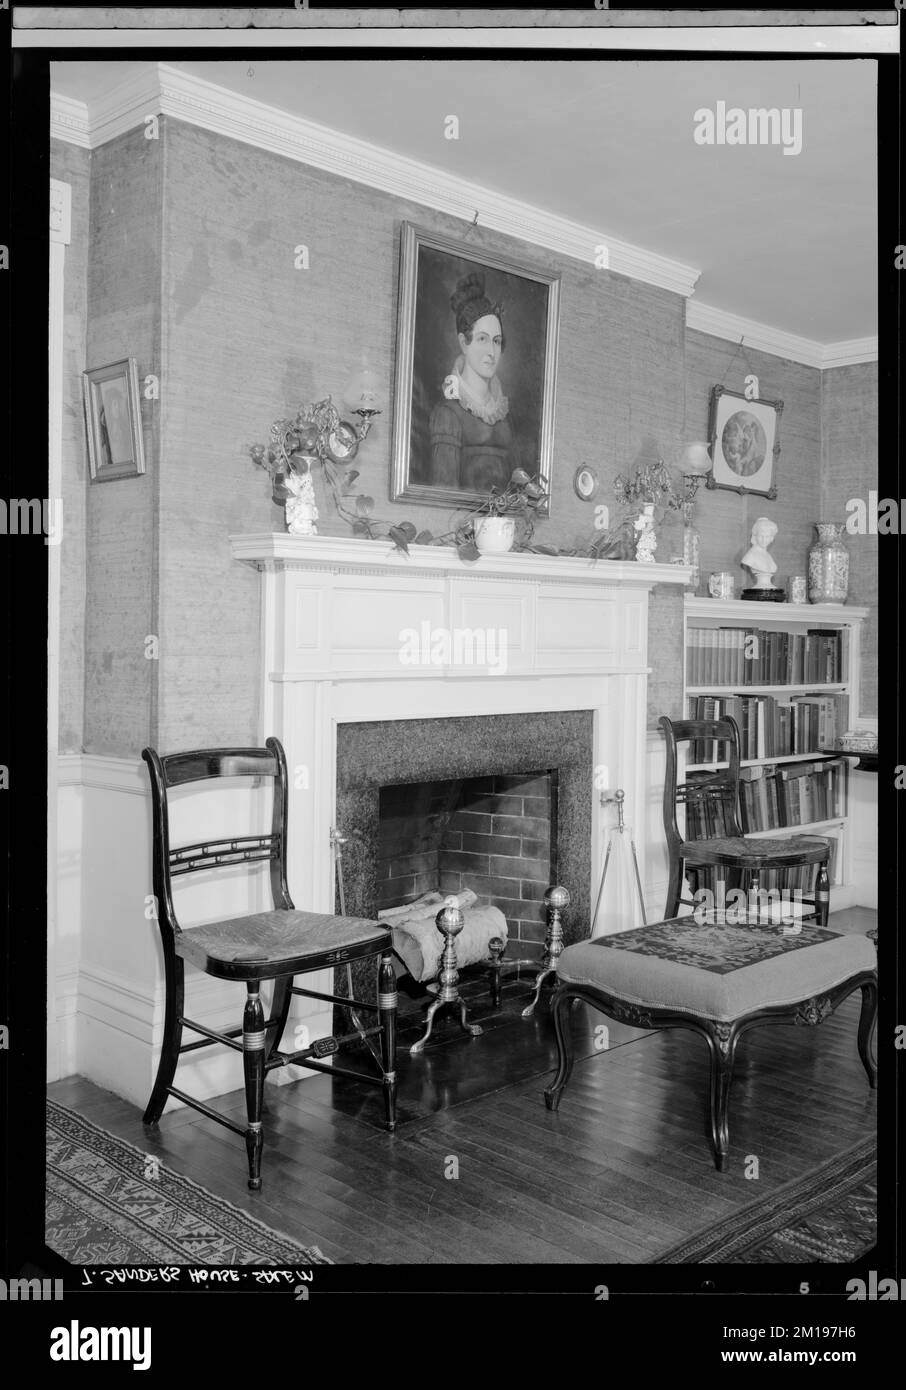 Thomas Sanders House, fireplace Salem, MA, interior , Interiors, Fireplaces. Samuel Chamberlain Photograph Negatives Collection Stock Photo